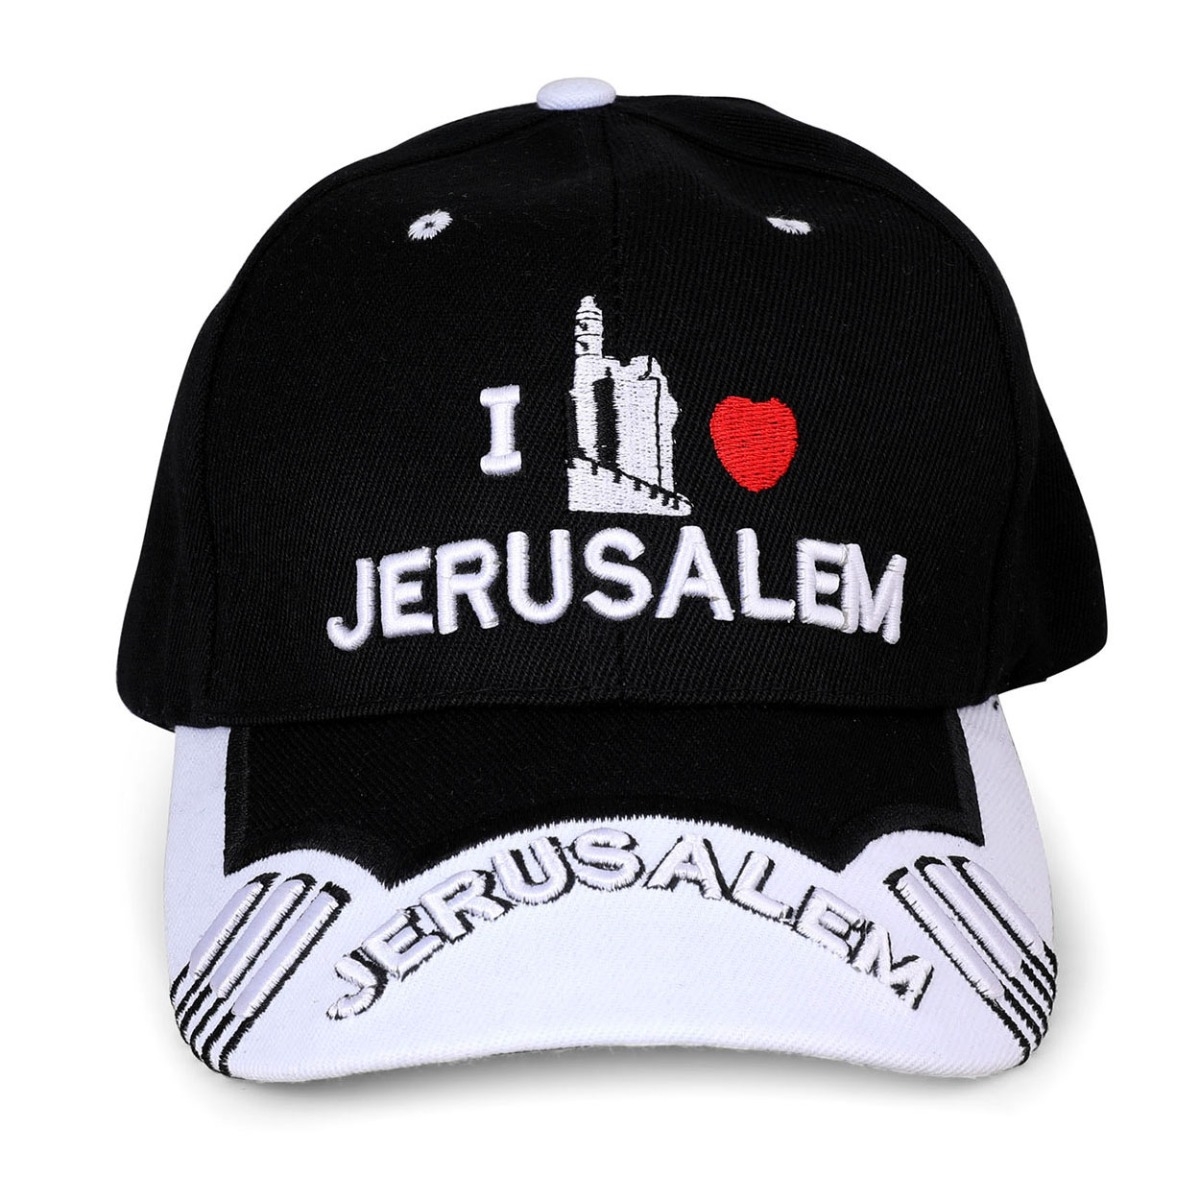 I Love Jerusalem Tower of David Baseball Cap – Black  - 1